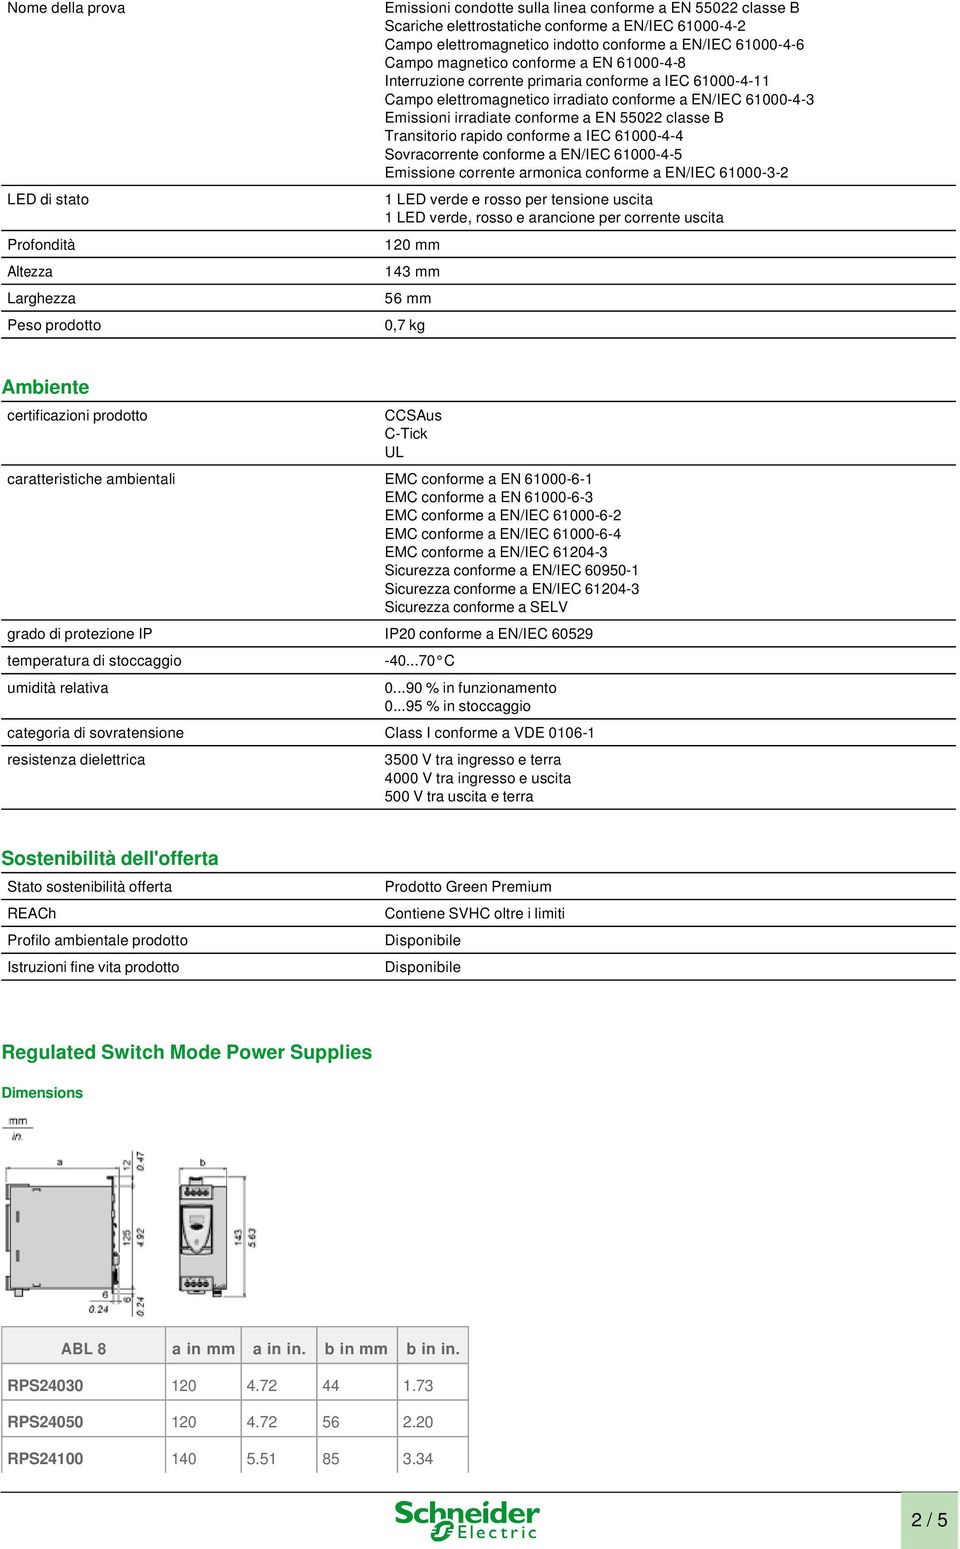 EN/IEC 61000-4-3 Emissioni irradiate conforme a EN 55022 classe B Transitorio rapido conforme a IEC 61000-4-4 Sovracorrente conforme a EN/IEC 61000-4-5 Emissione corrente armonica conforme a EN/IEC